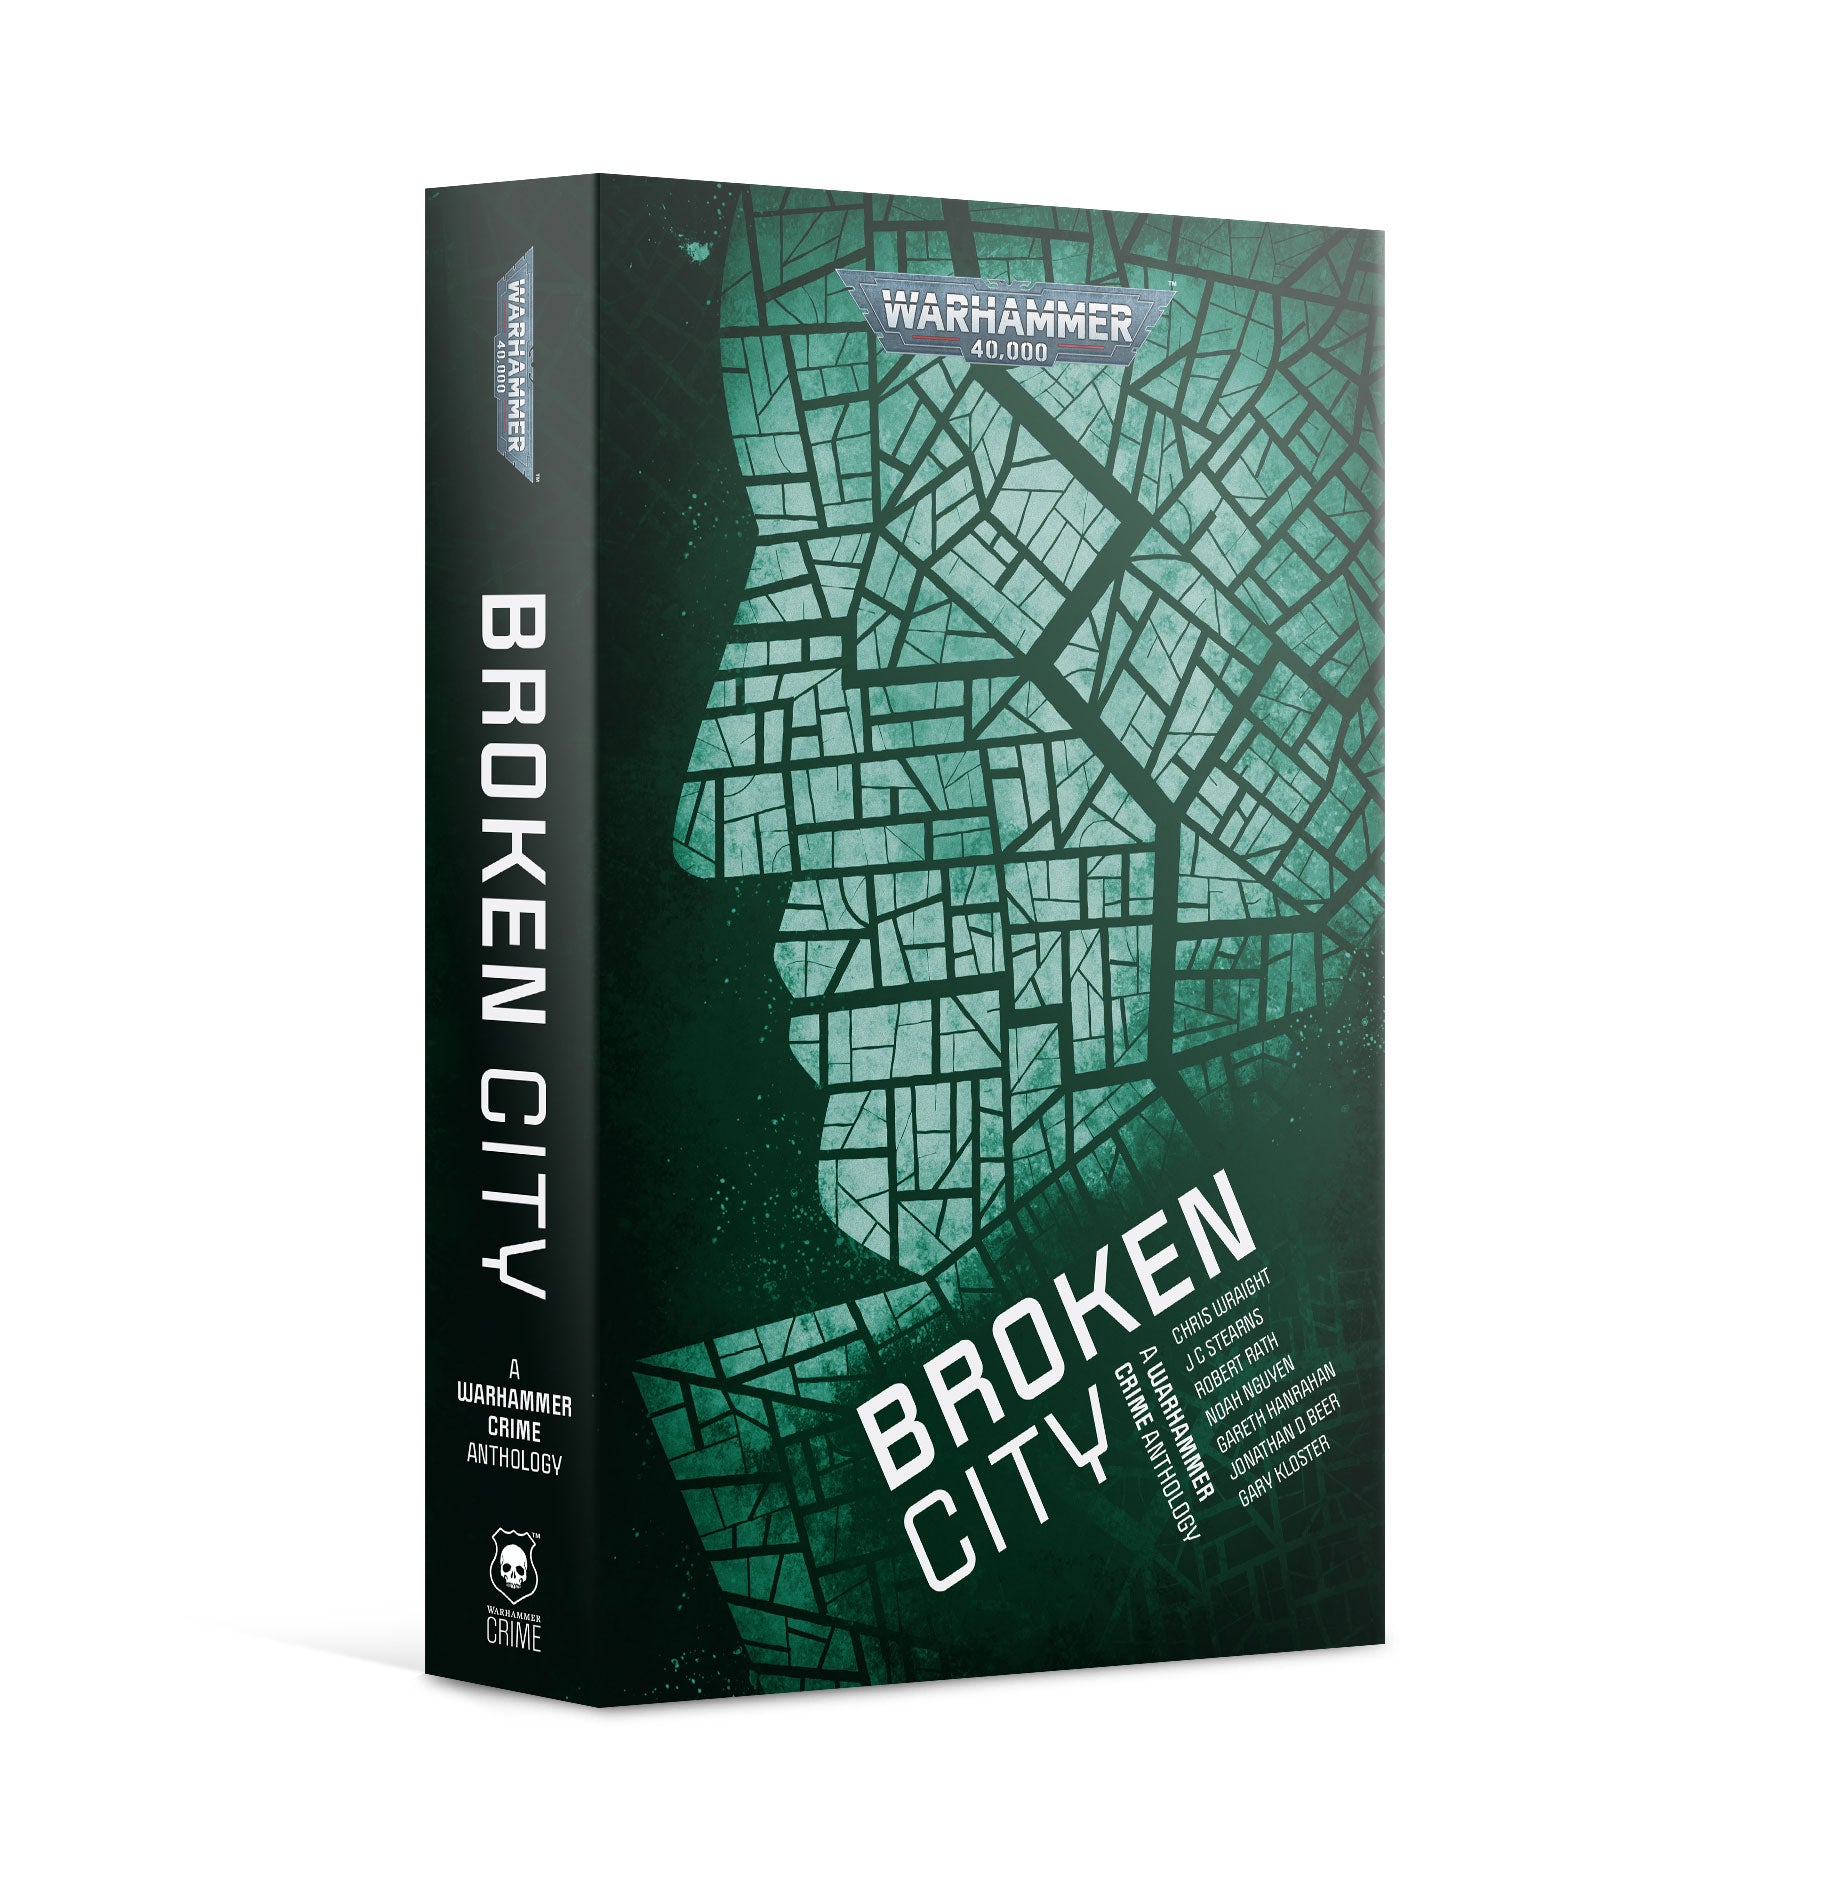 Warhammer Crime Anthology: Broken City (PB)